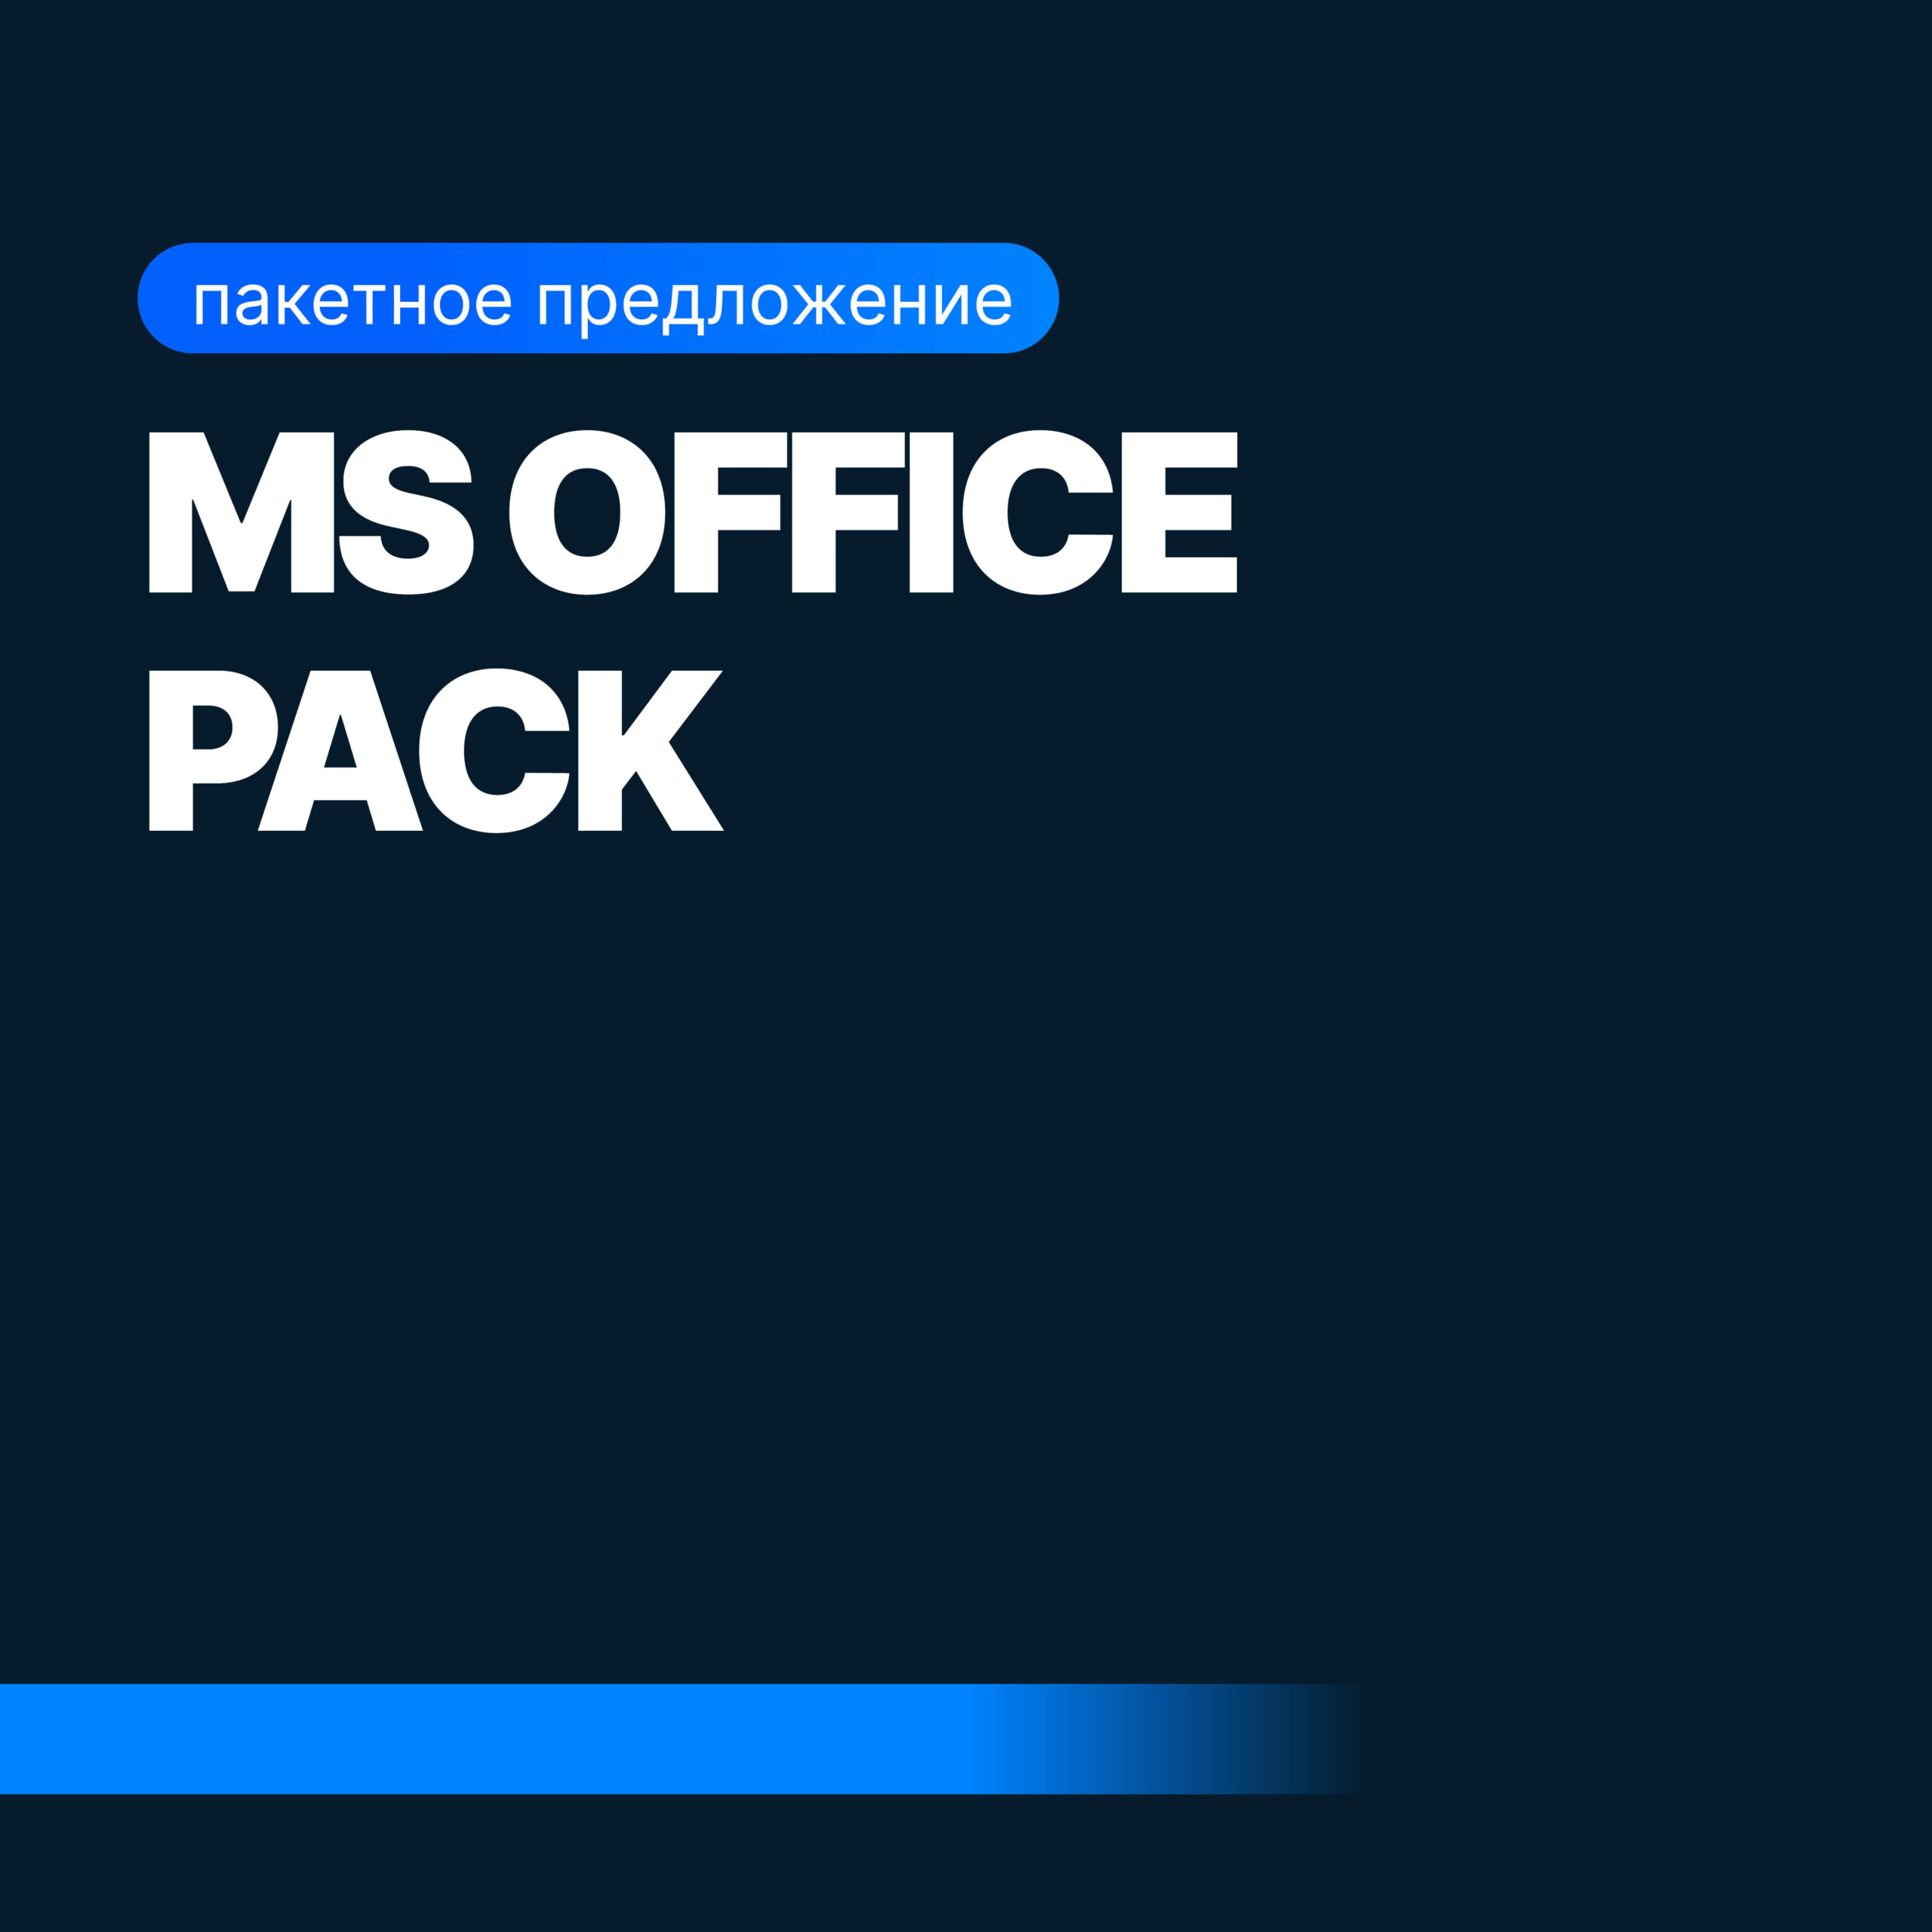 ms office и инструменты google MS Office Pack